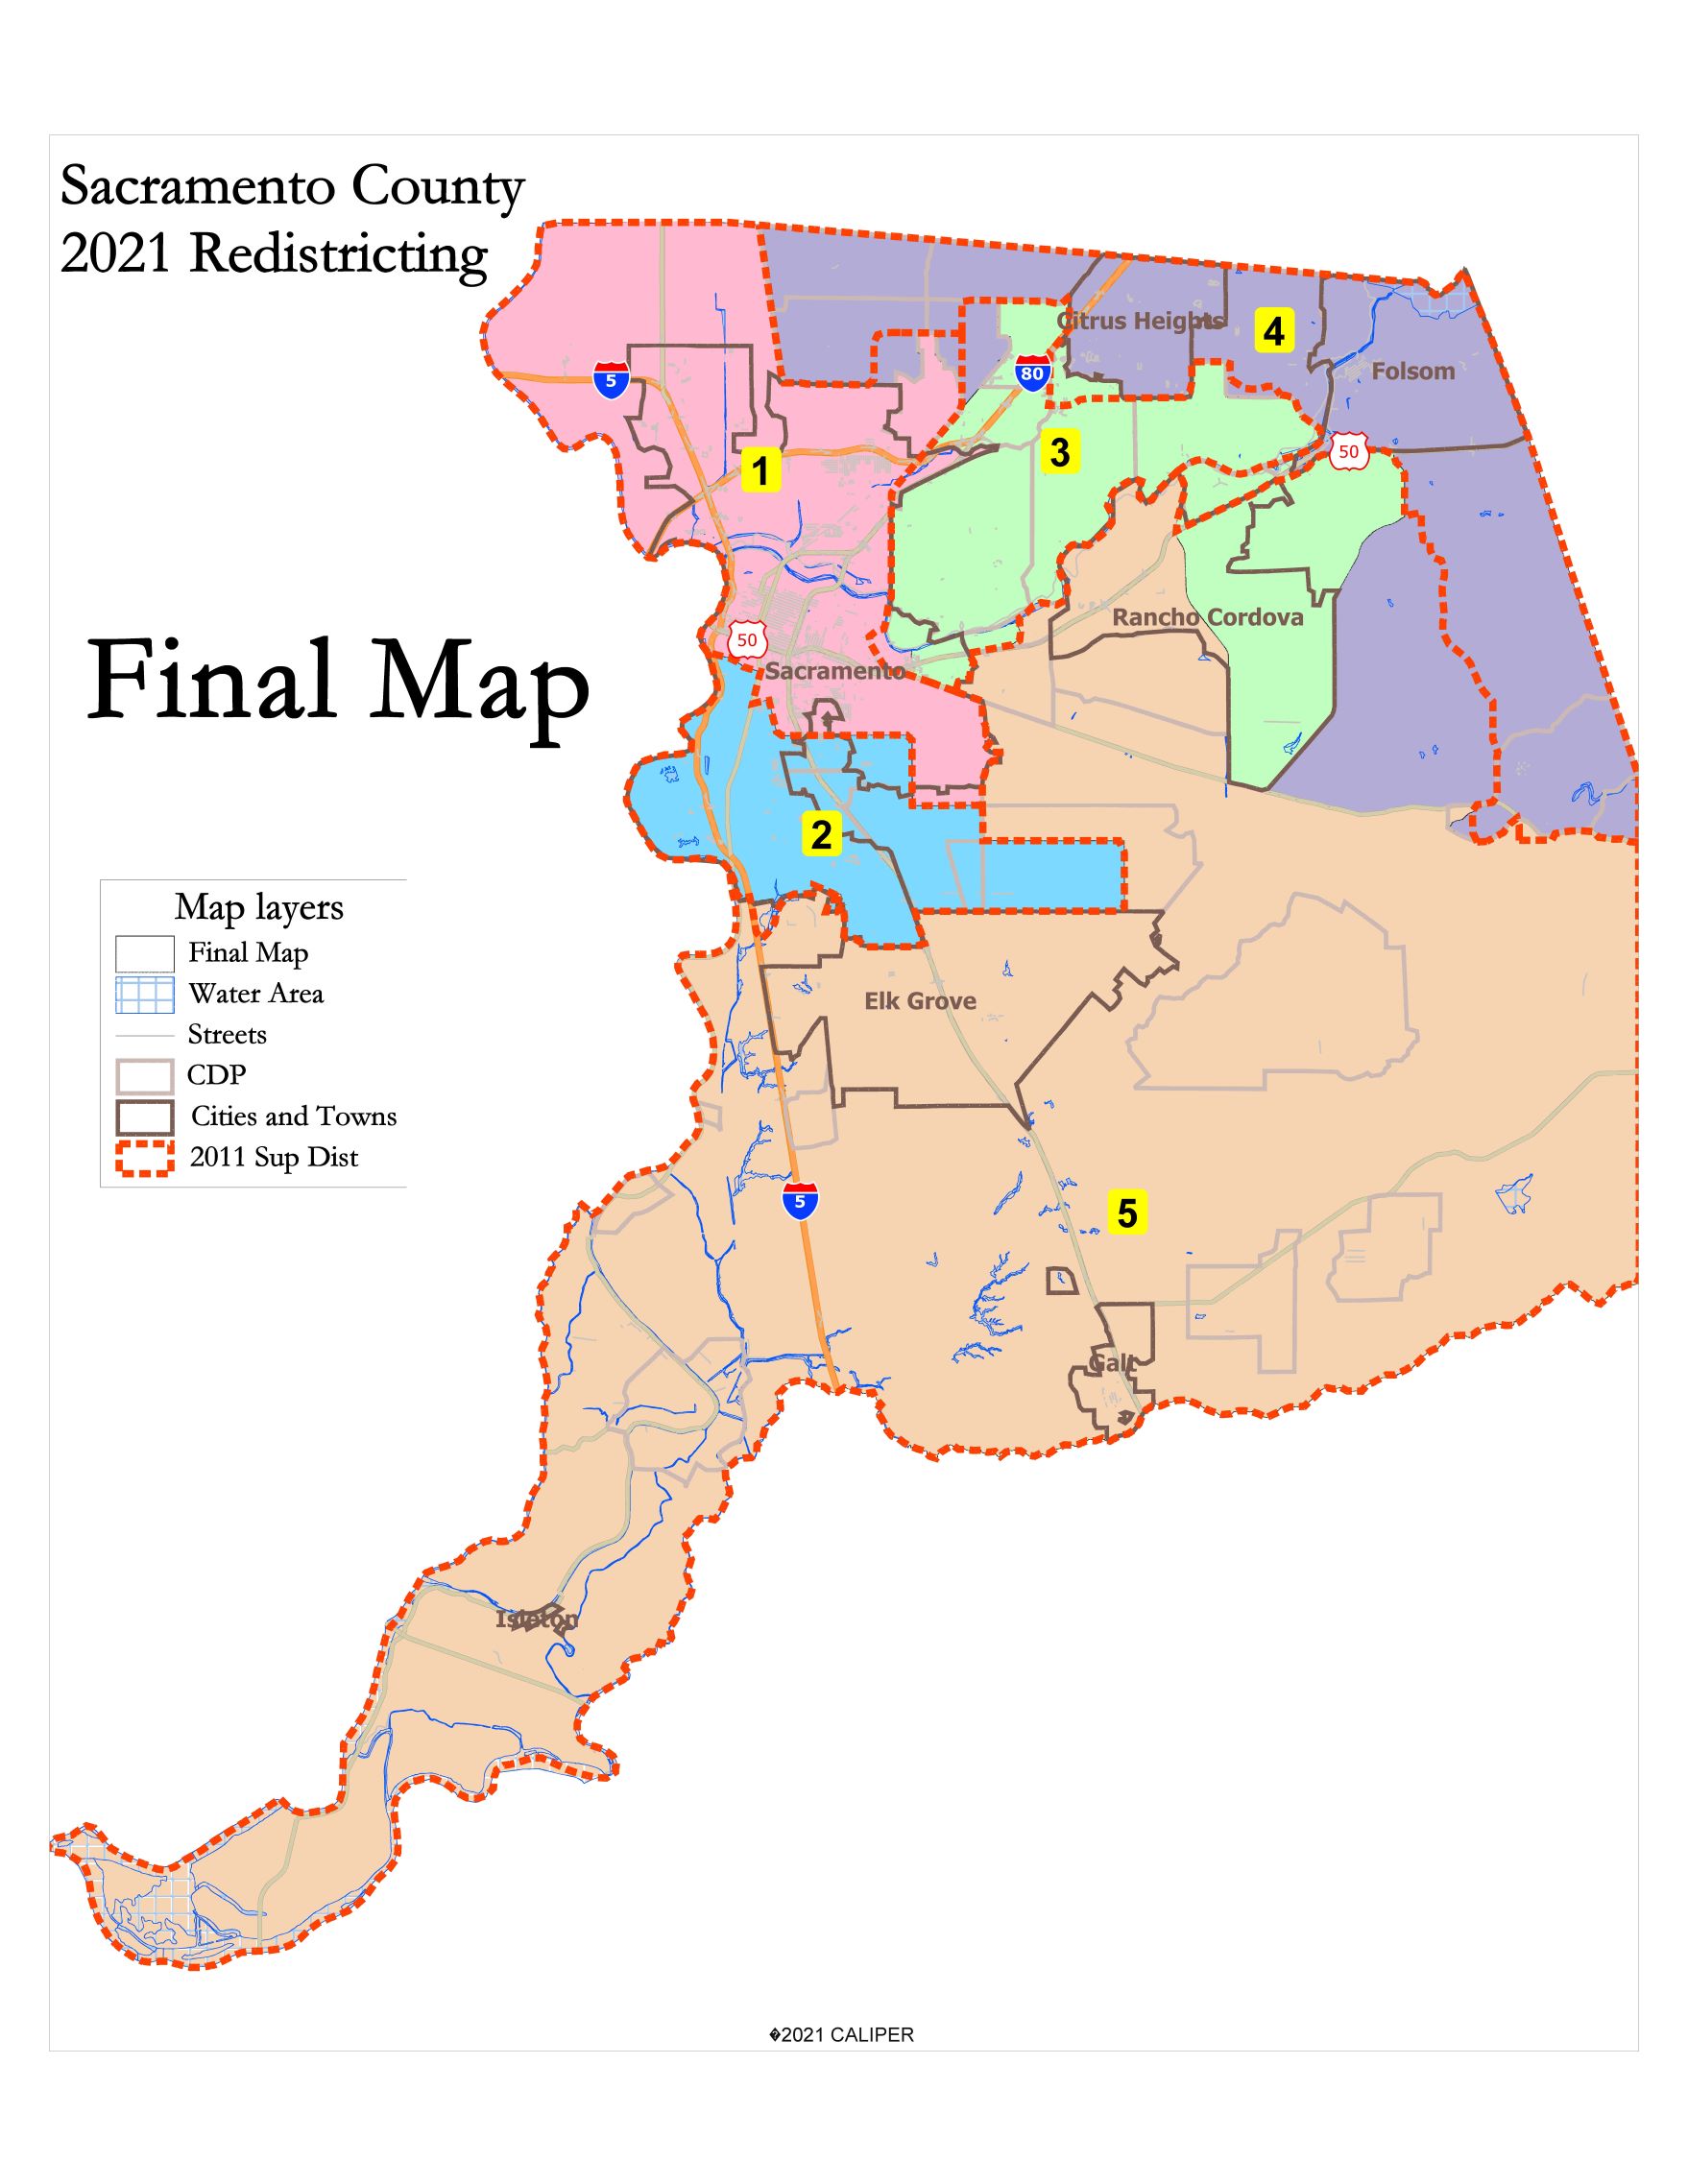 Sacramento County final redistricting map